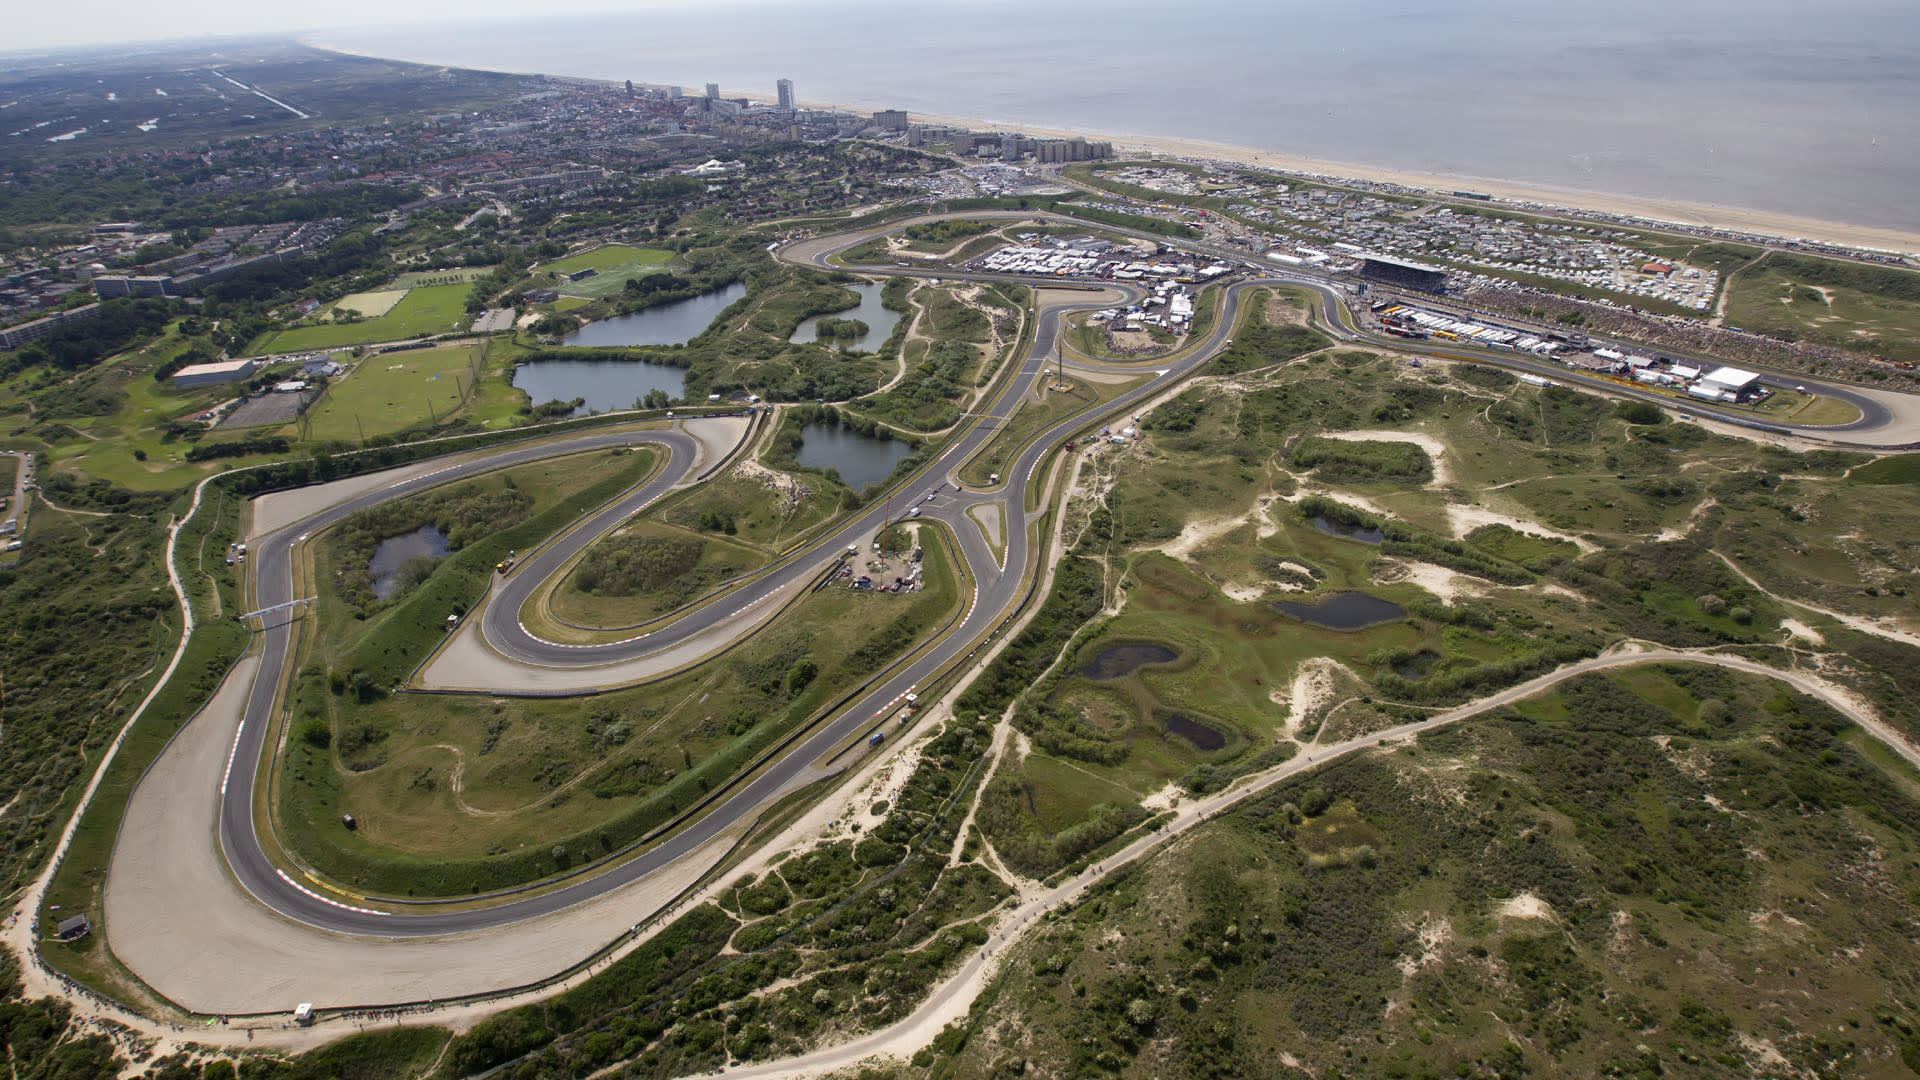 F1 Zandvoort 2021 Datum Organisers Confirm Dutch Grand Prix Will Not Be Held In 2020 Formula 1